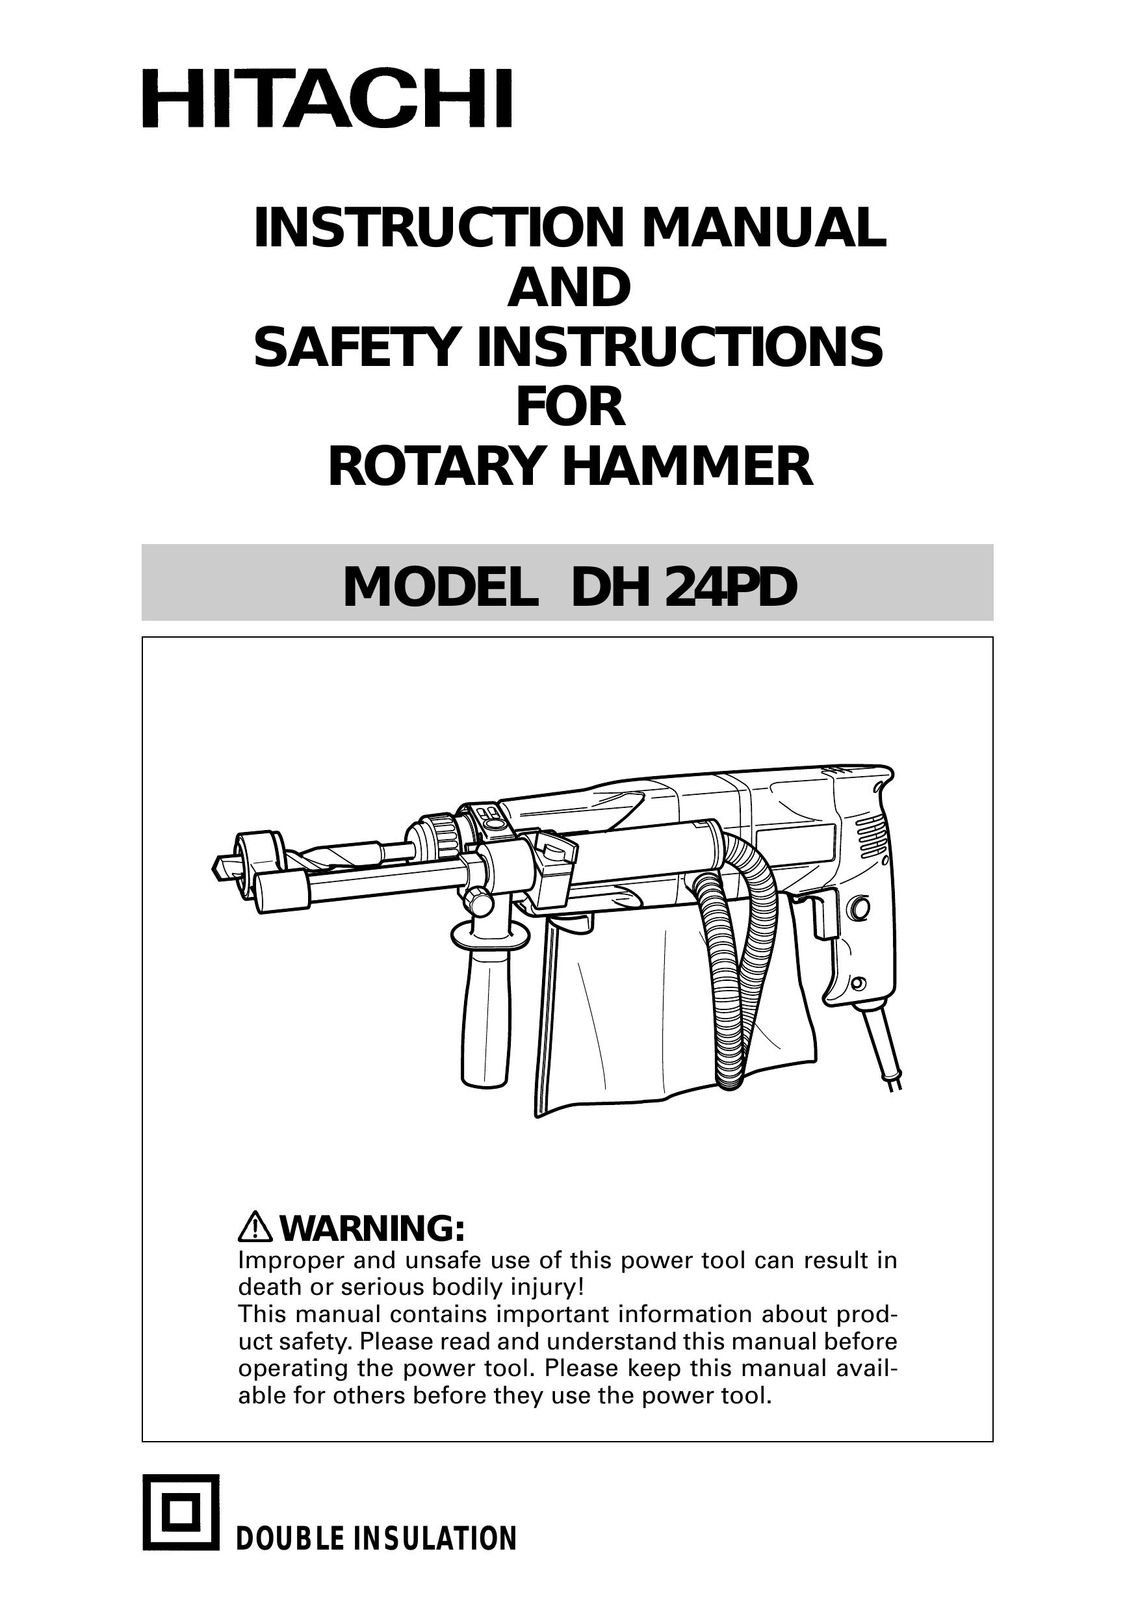 Hitachi DH 24PD Power Hammer User Manual